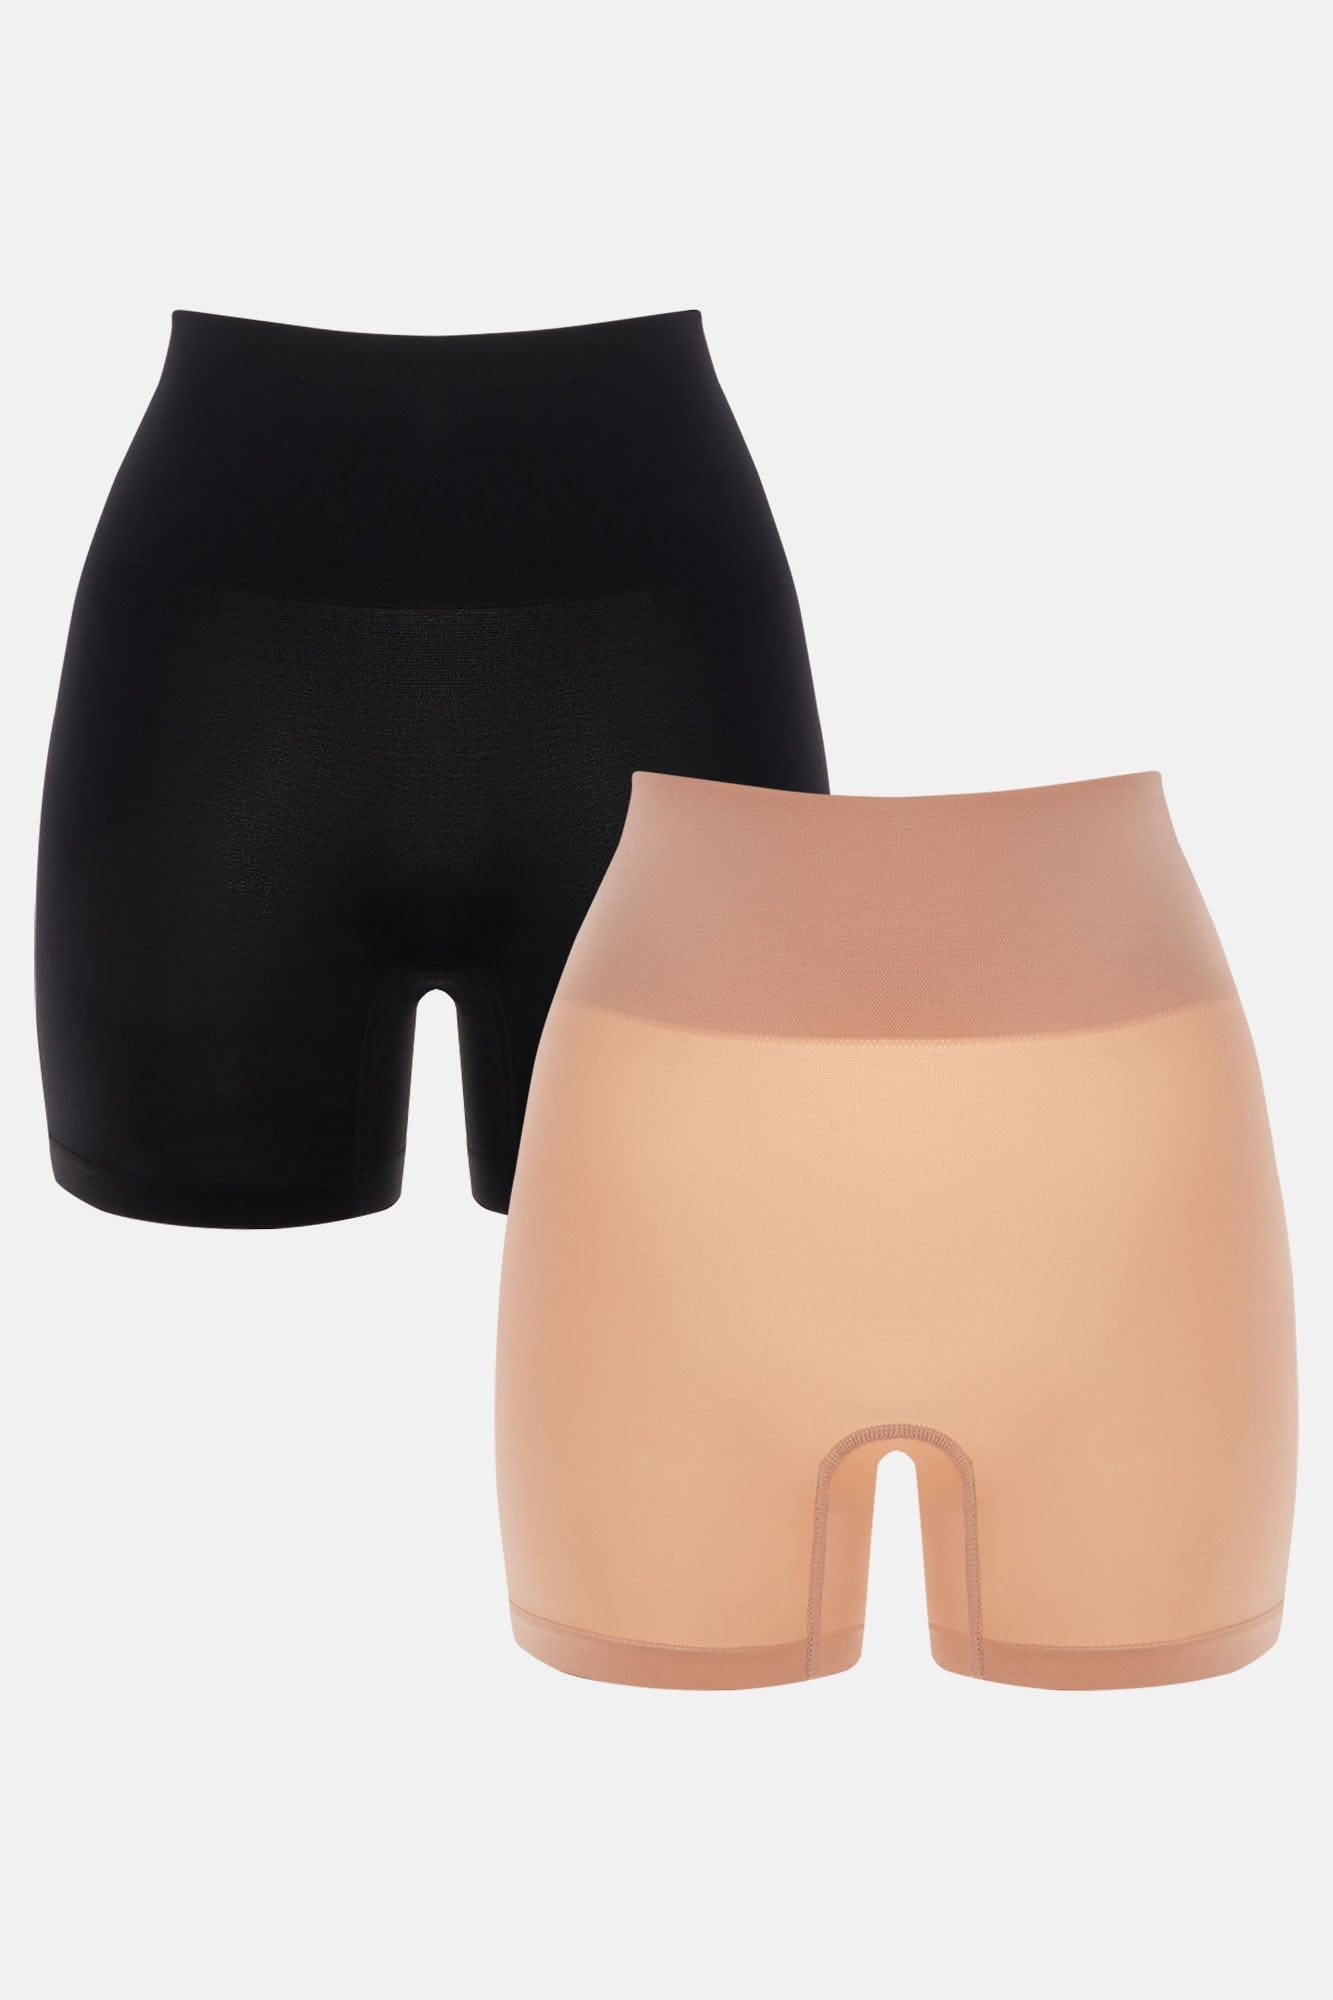 Smooth And Slim Shapewear Shorts 2 Pack - Black/combo, Fashion Nova,  Lingerie & Sleepwear